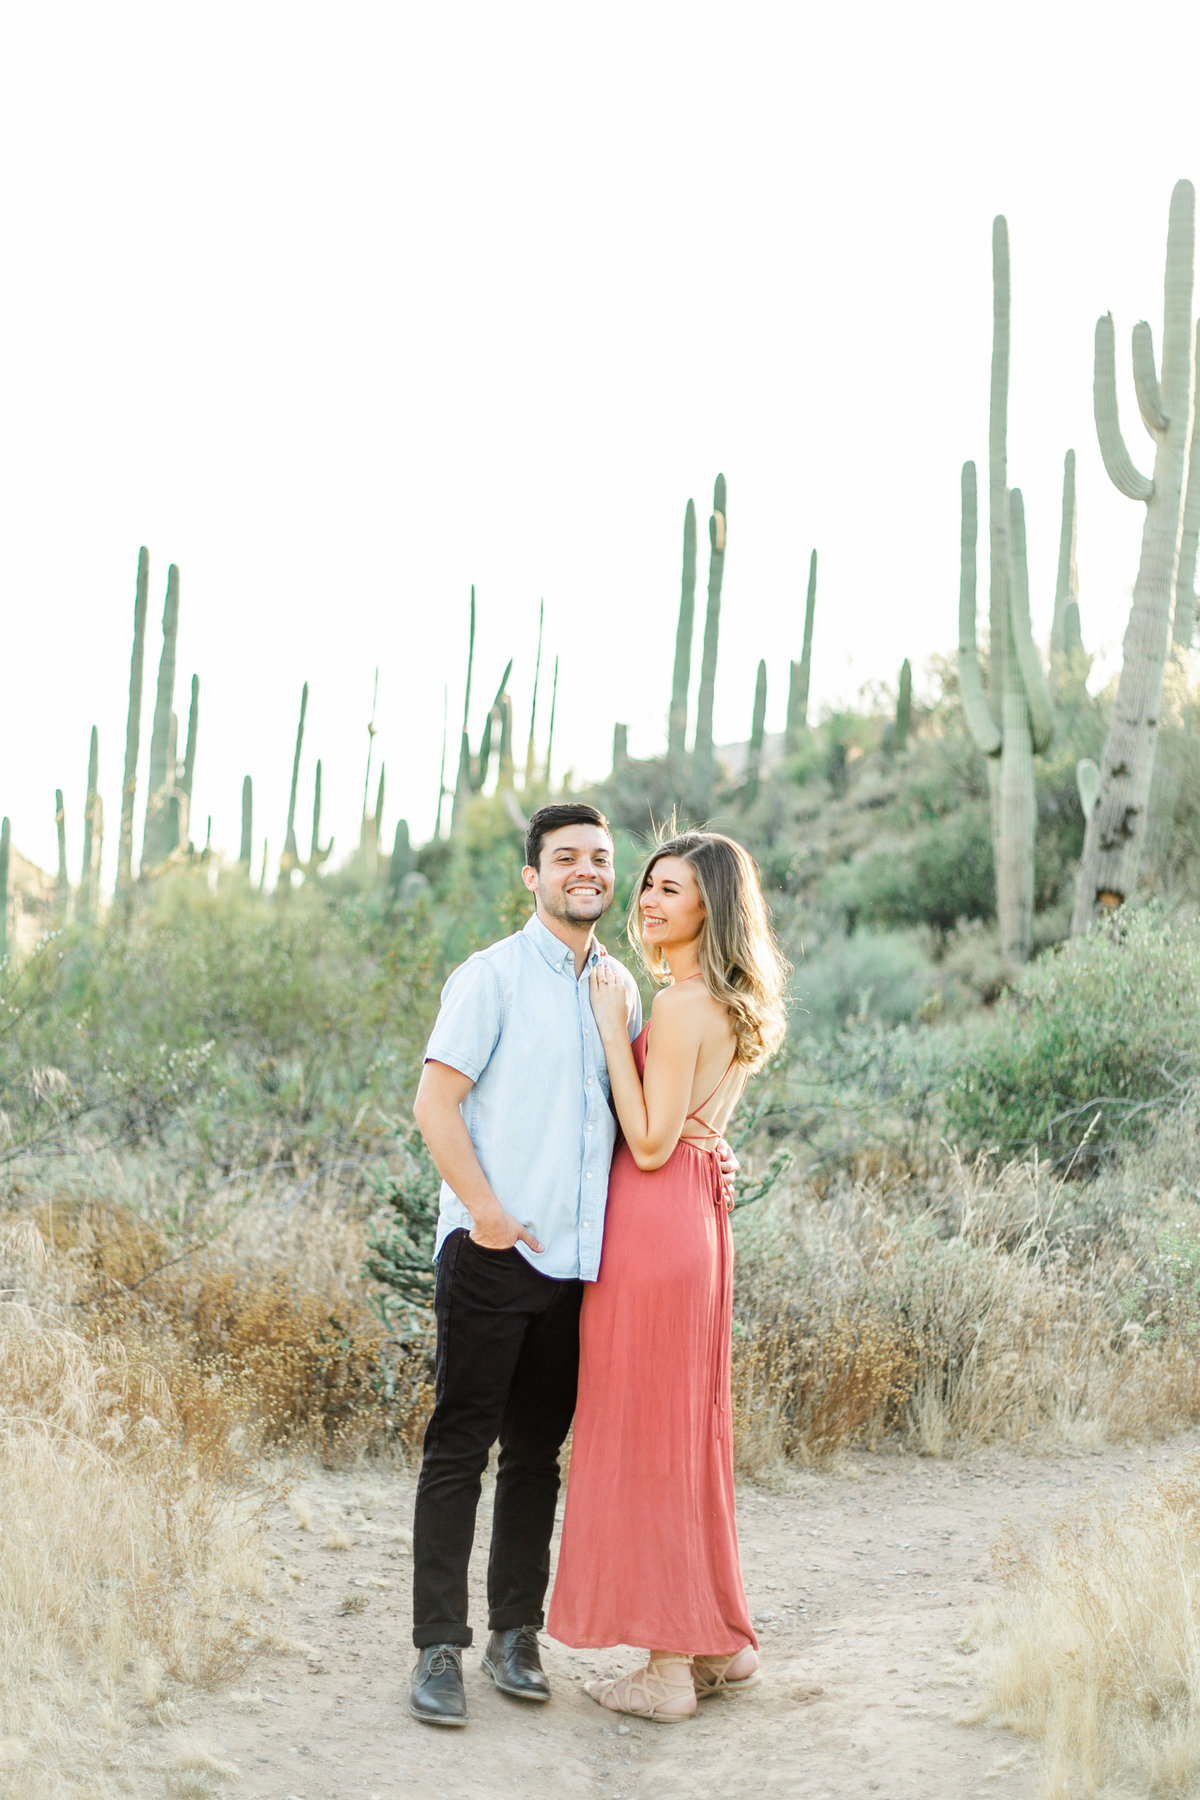 Karlie Colleen Photography - Arizona Desert Engagement - Brynne & Josh -90